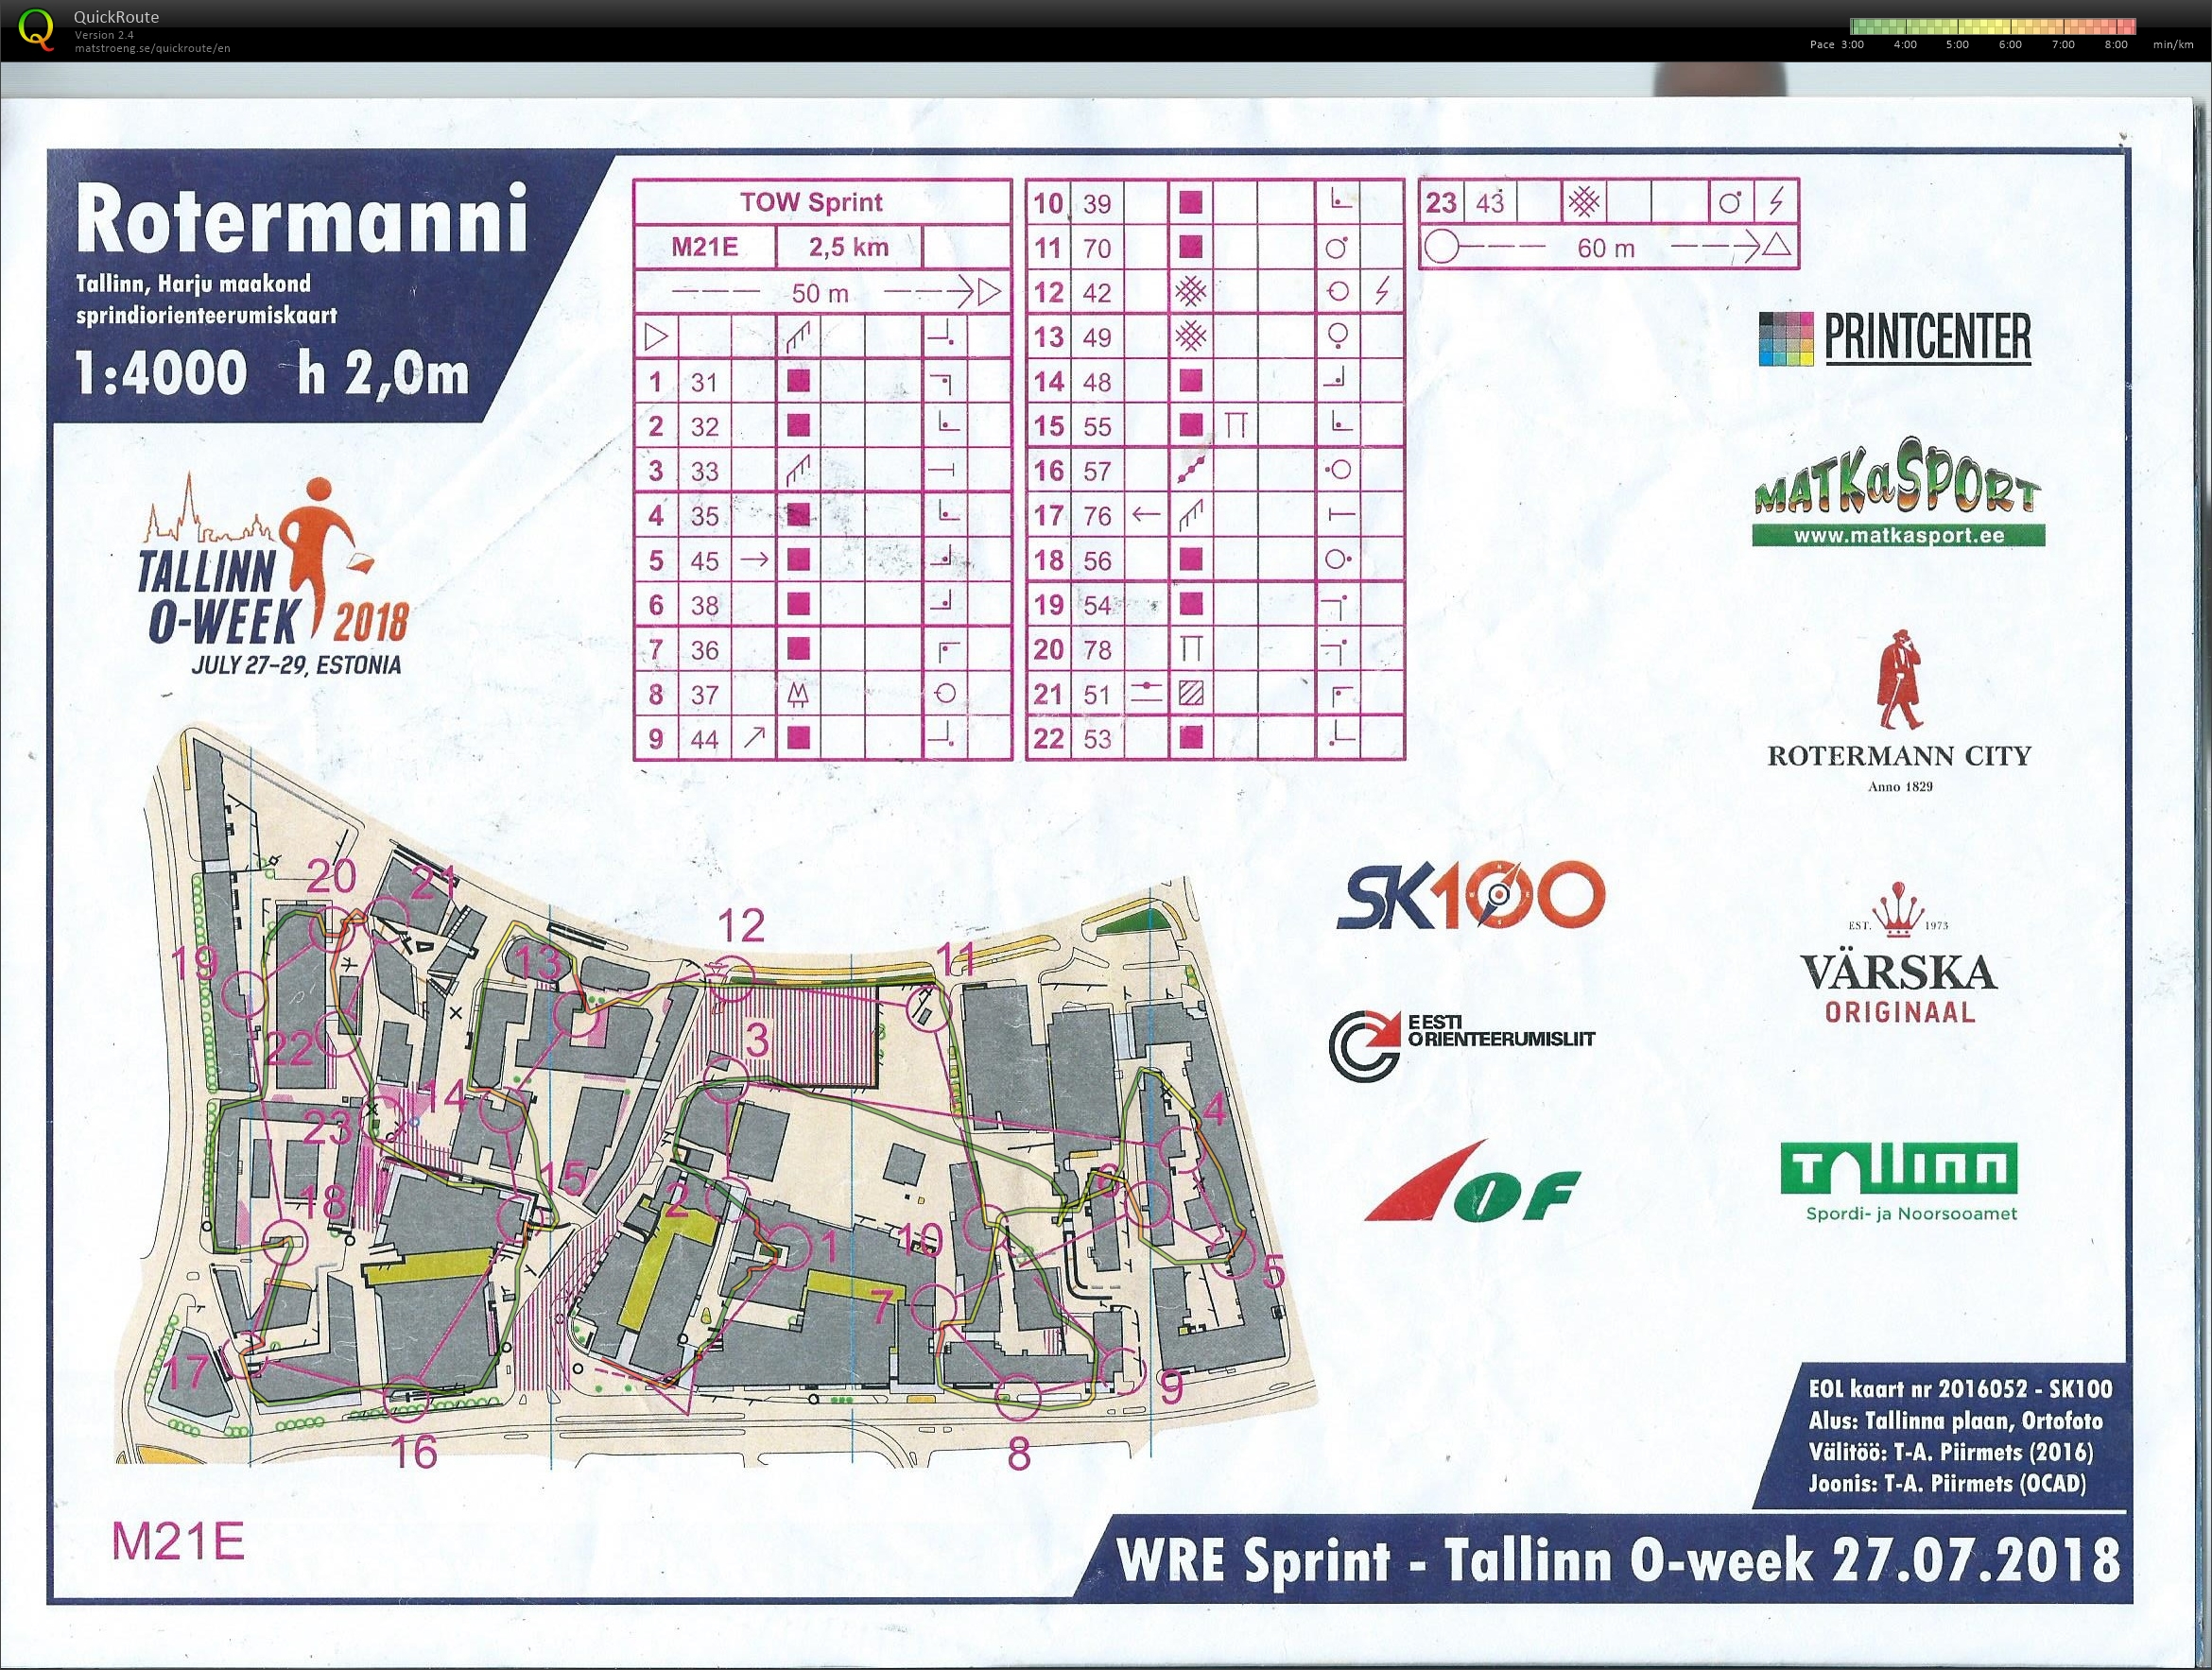 Z590 - Tallinn O-Week Sprint WRE (27.07.2018)